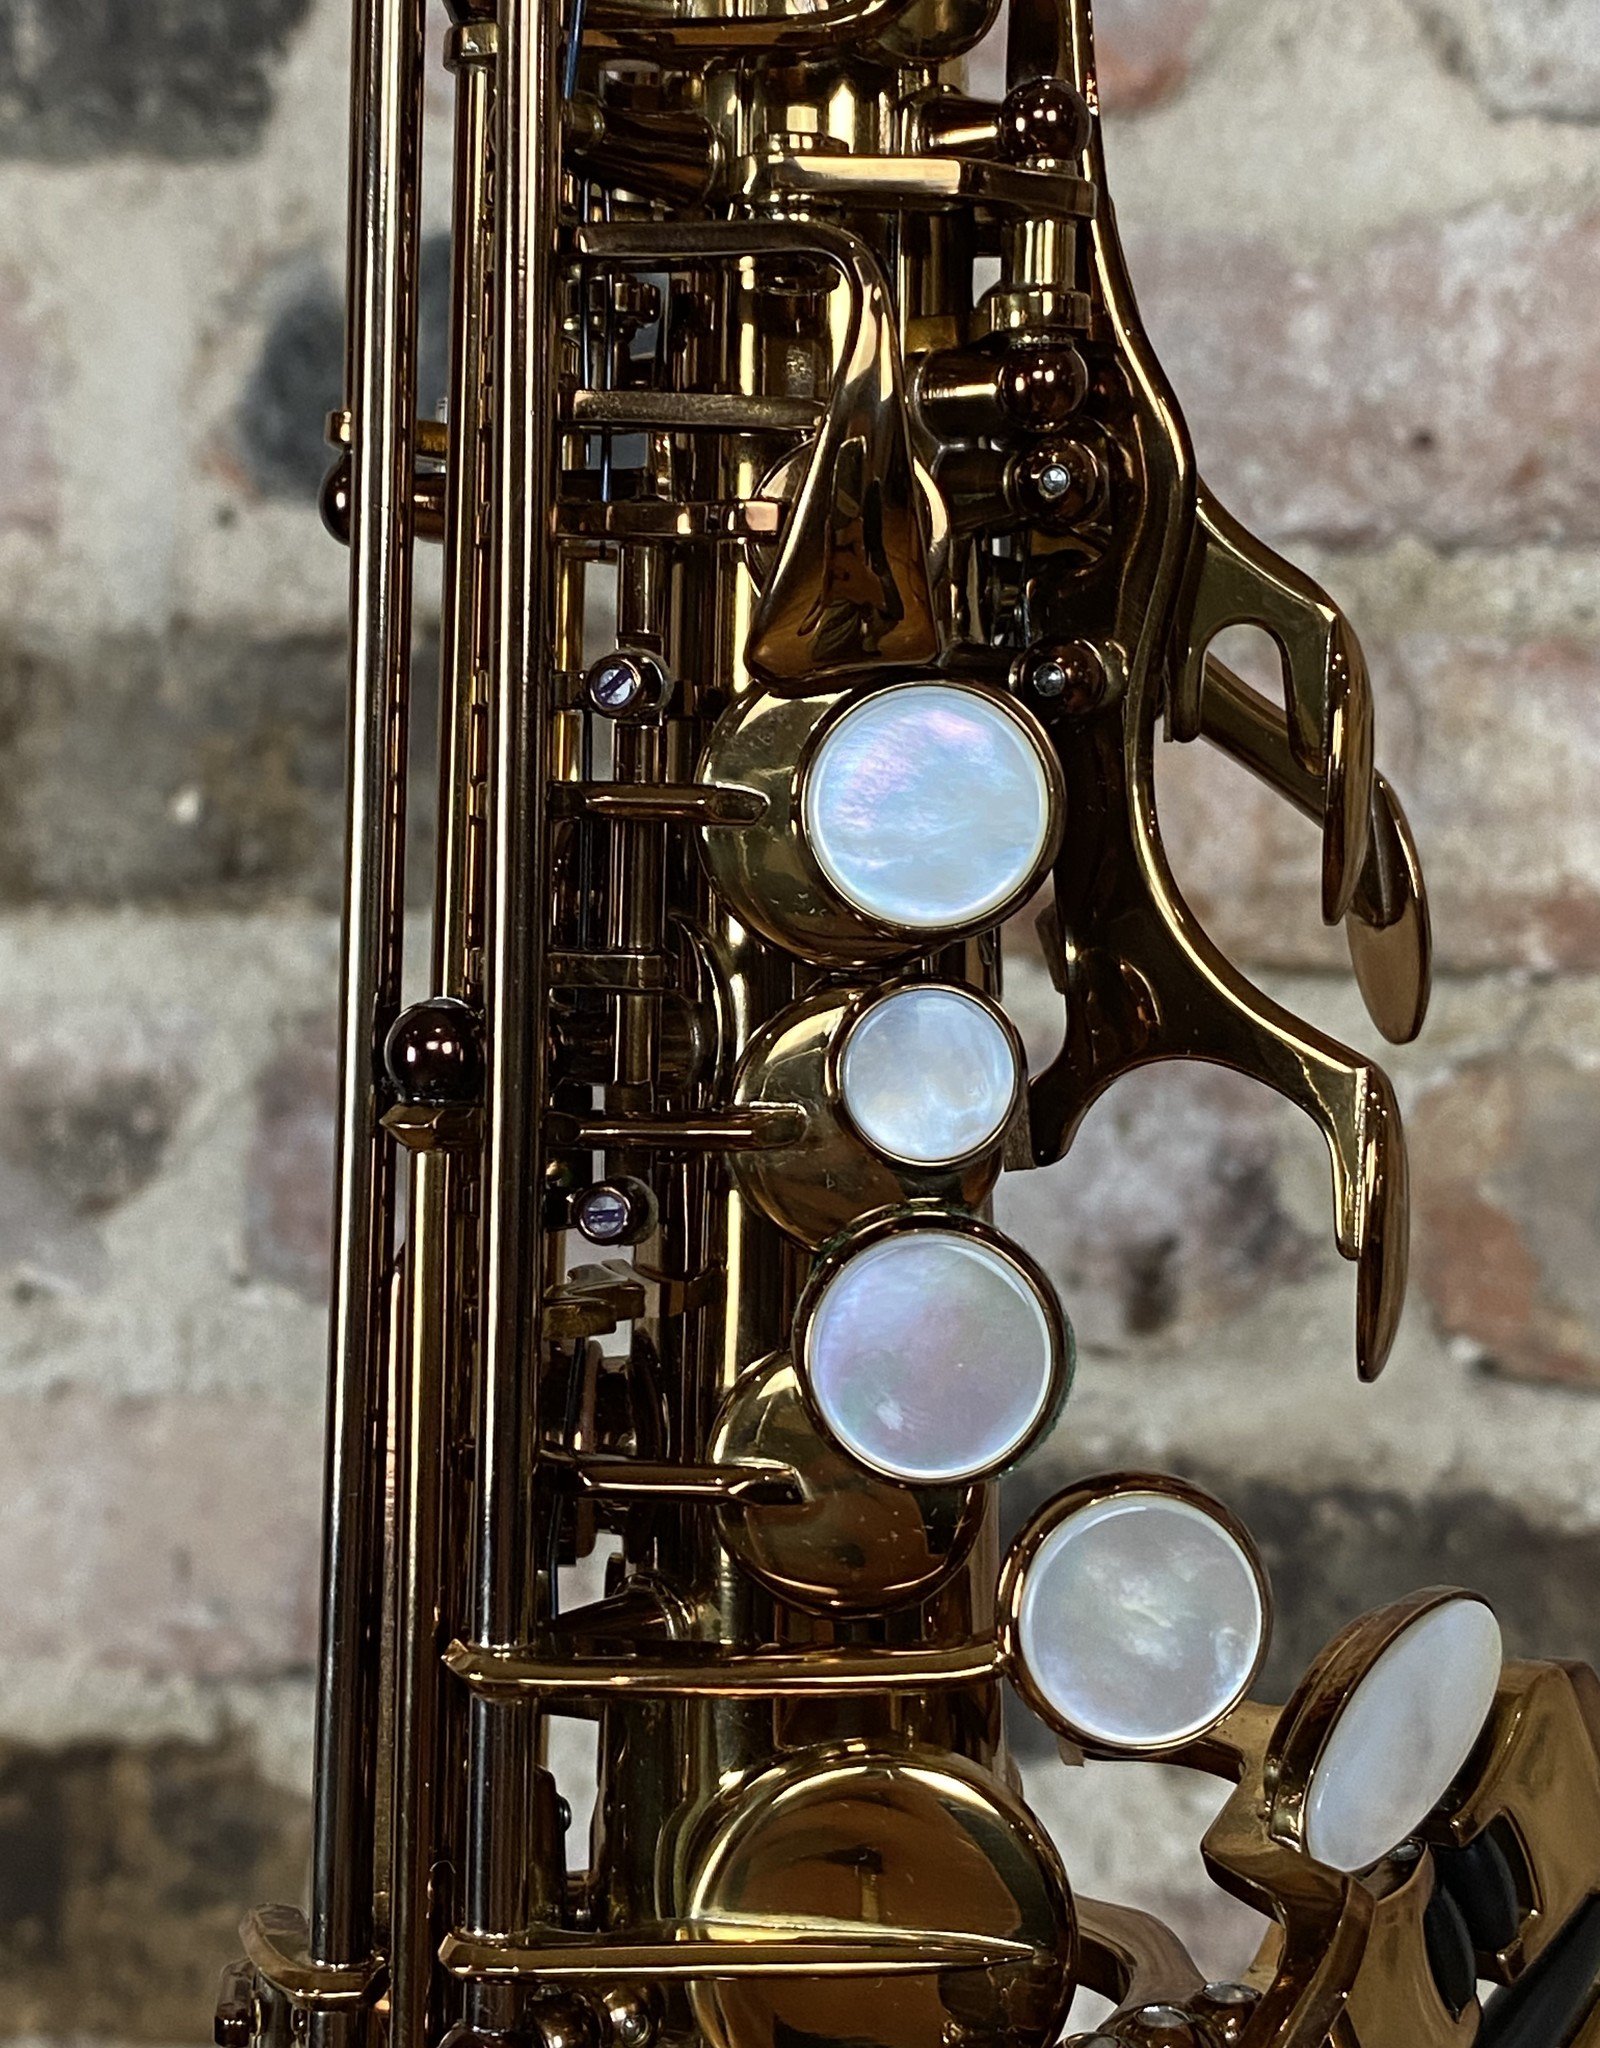 JL Woodwinds Artist Edition New York Signature Soprano Saxophone Cognac Lacquered